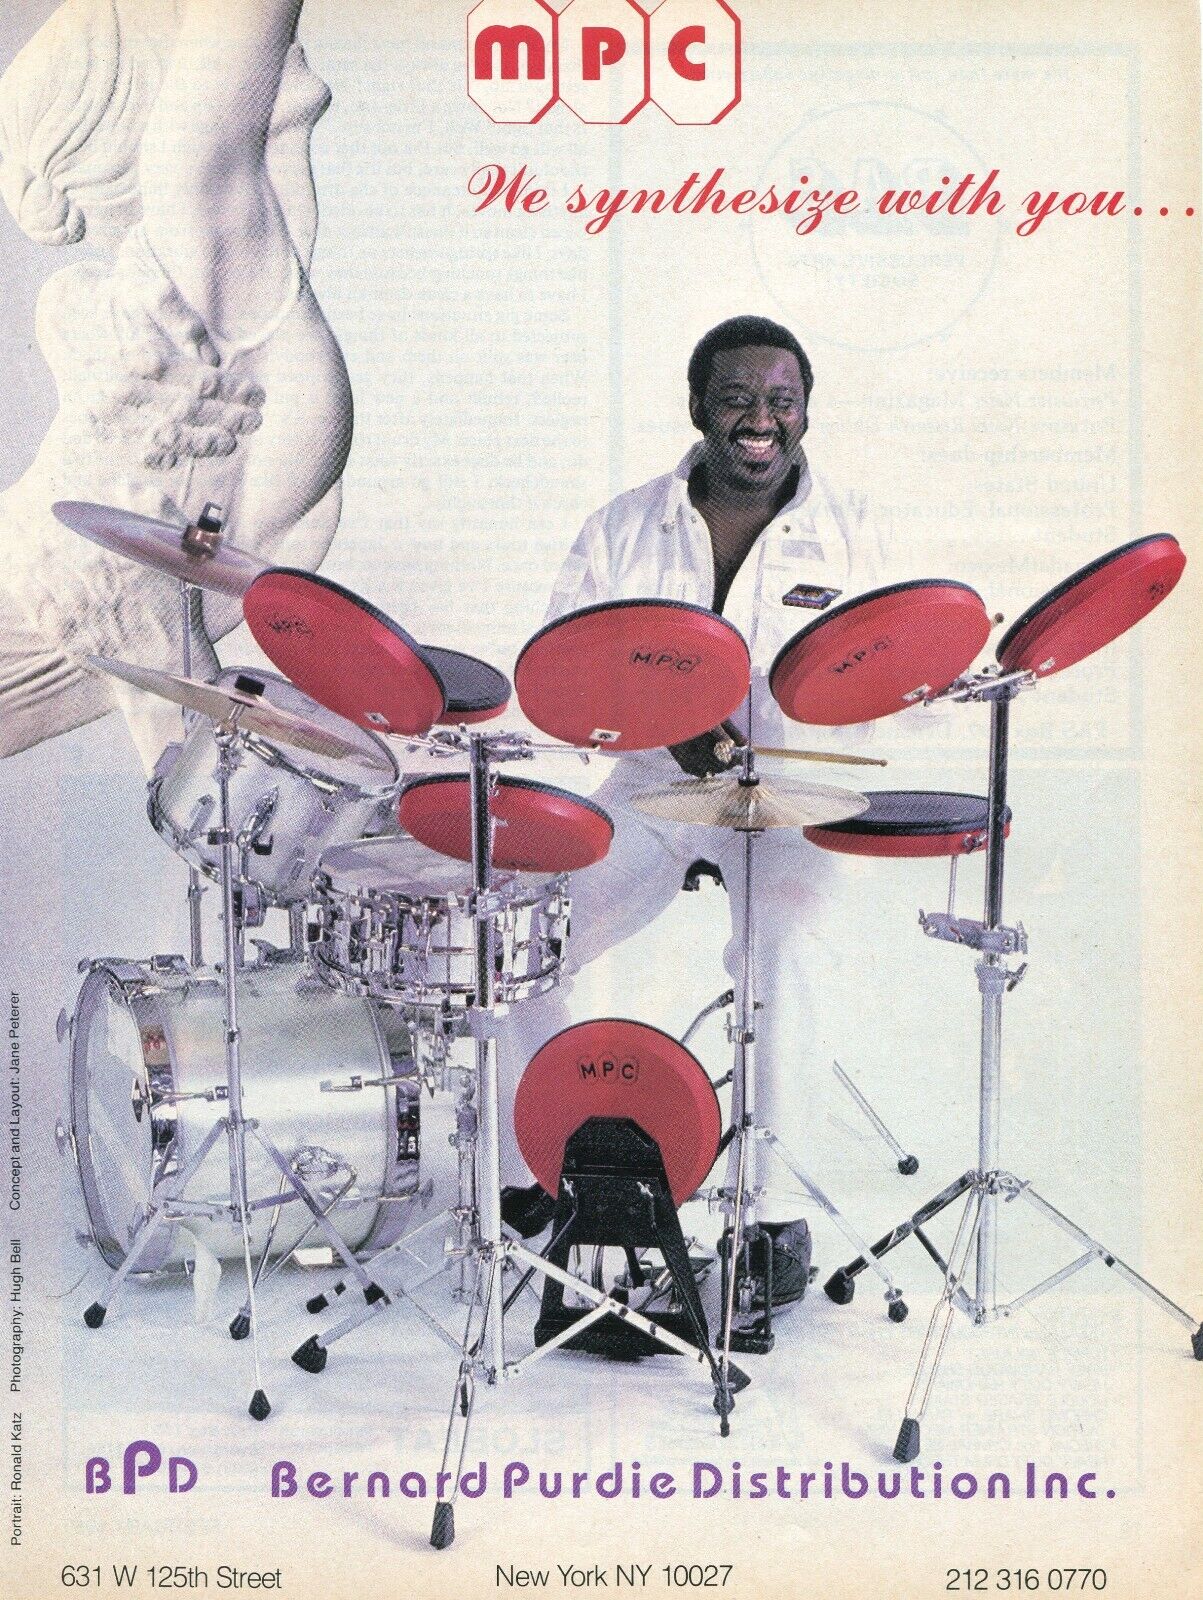 1985 Print Ad of MPC Electronic Drum Kit BPD Bernard Purdie Distribution